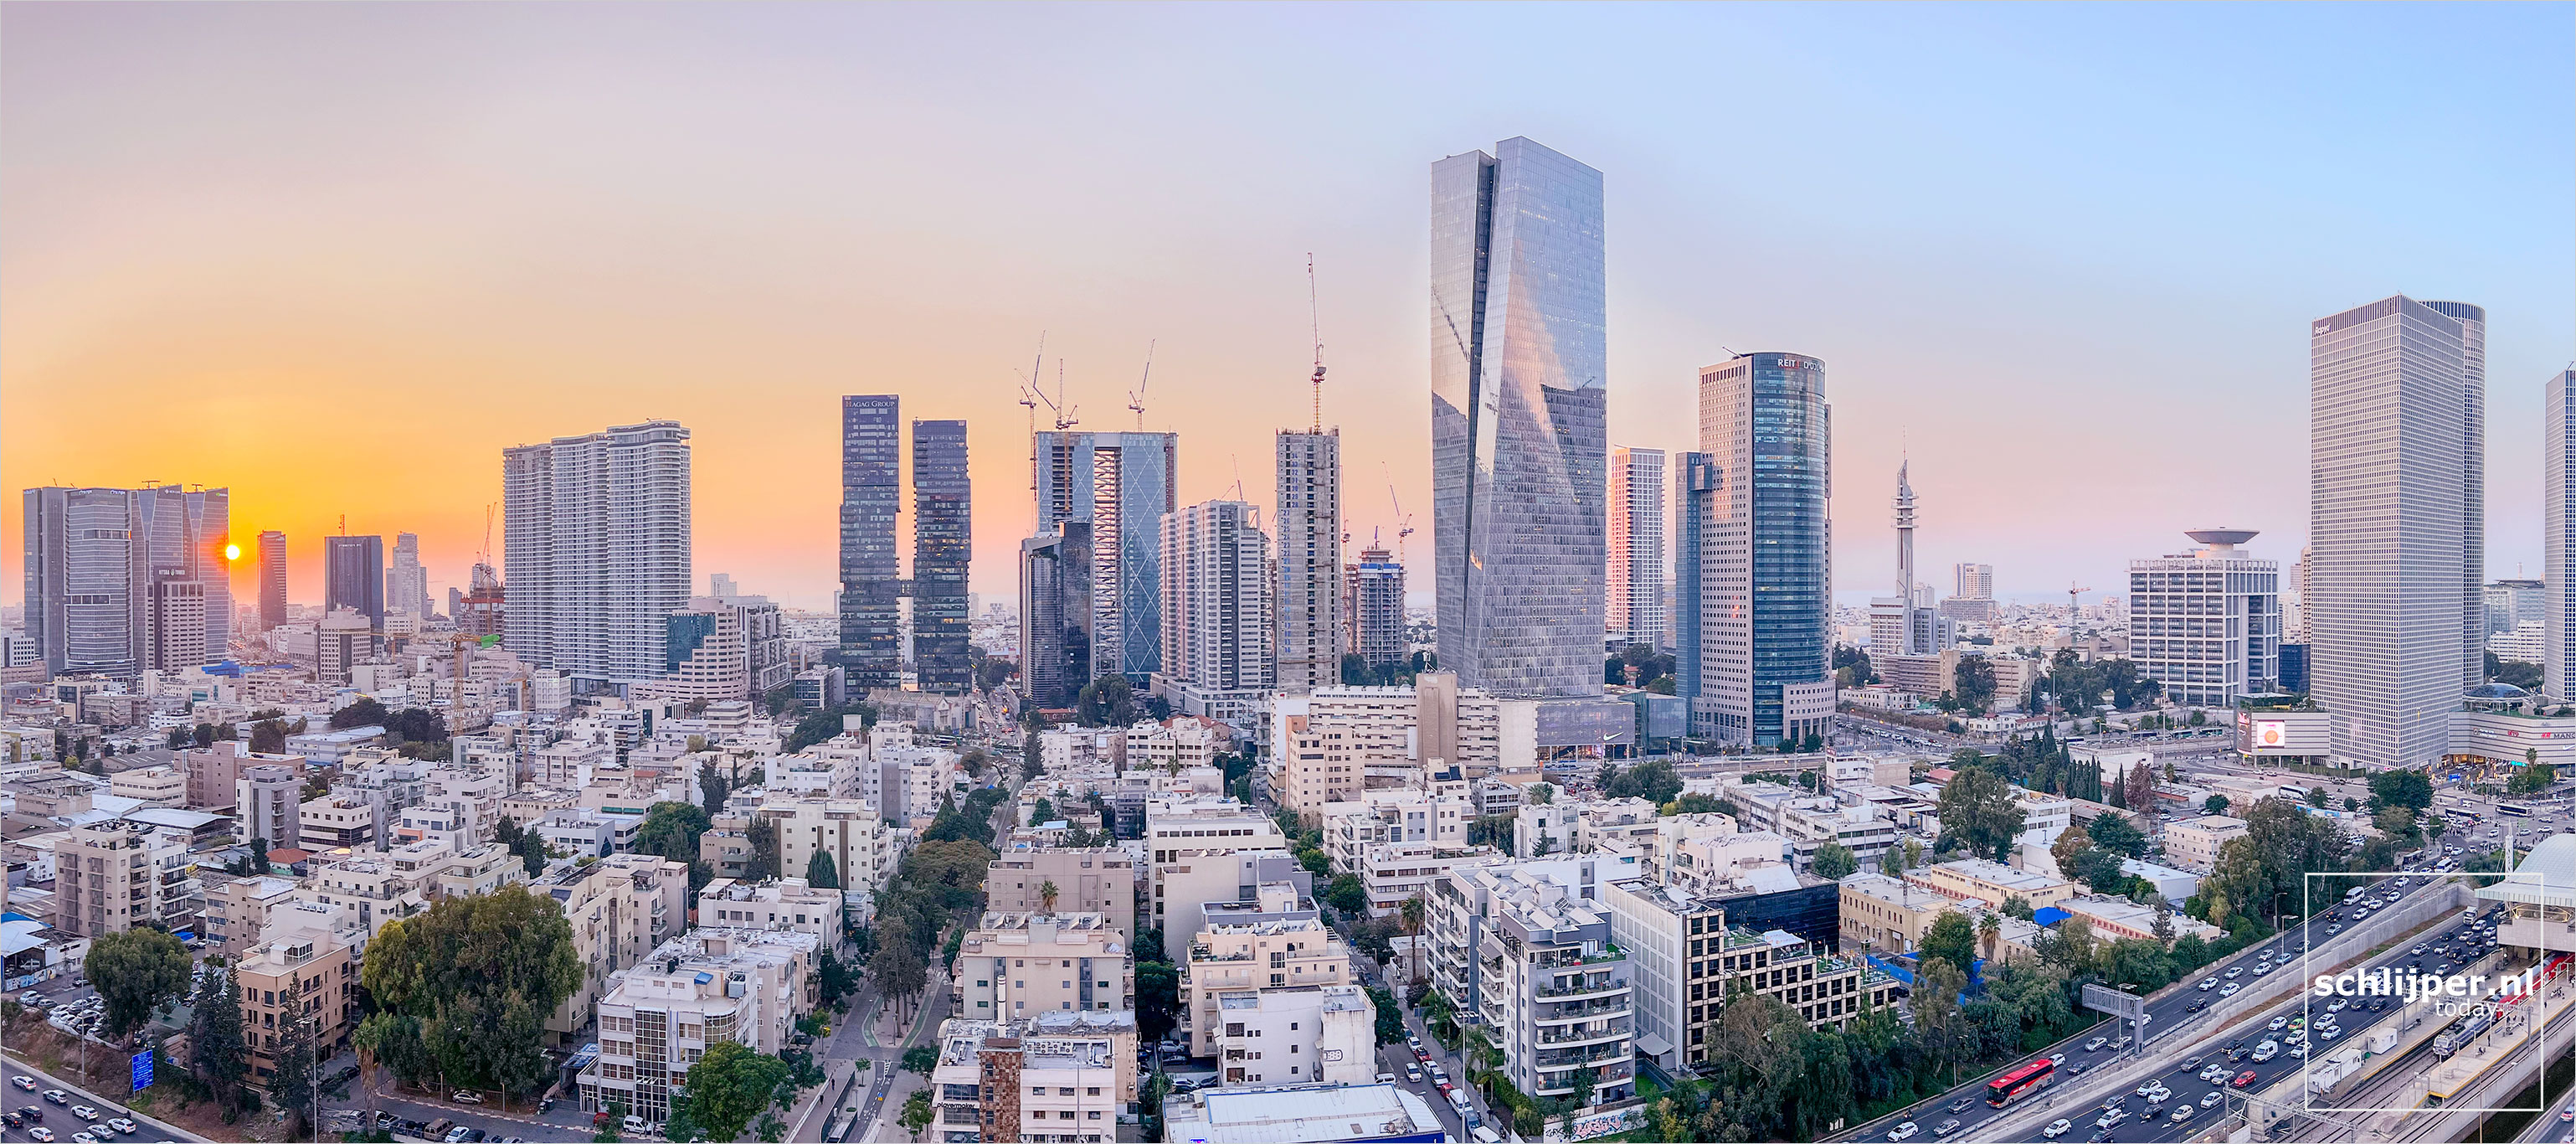 Israel, Tel Aviv, 3 januari 2023